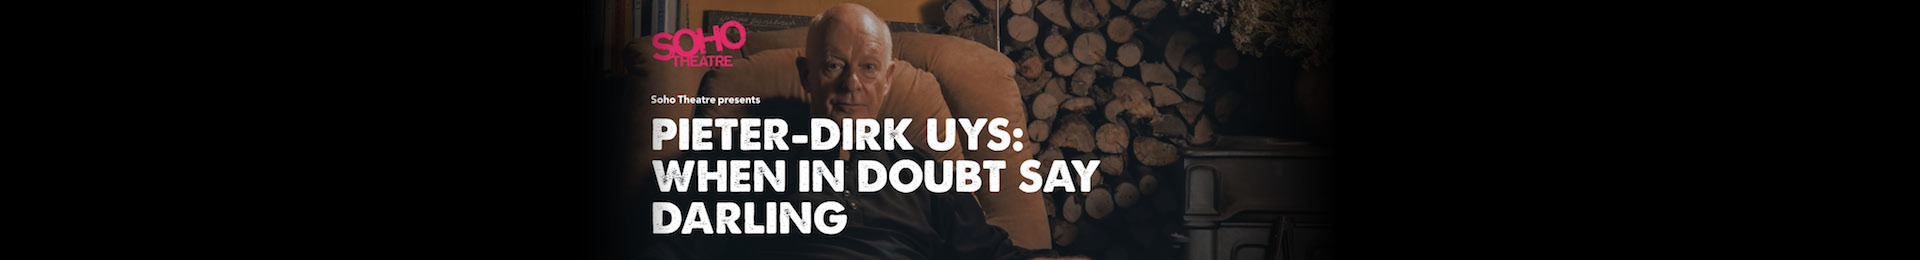 Pieter-Dirk Uys: When in Doubt Say Darling banner image